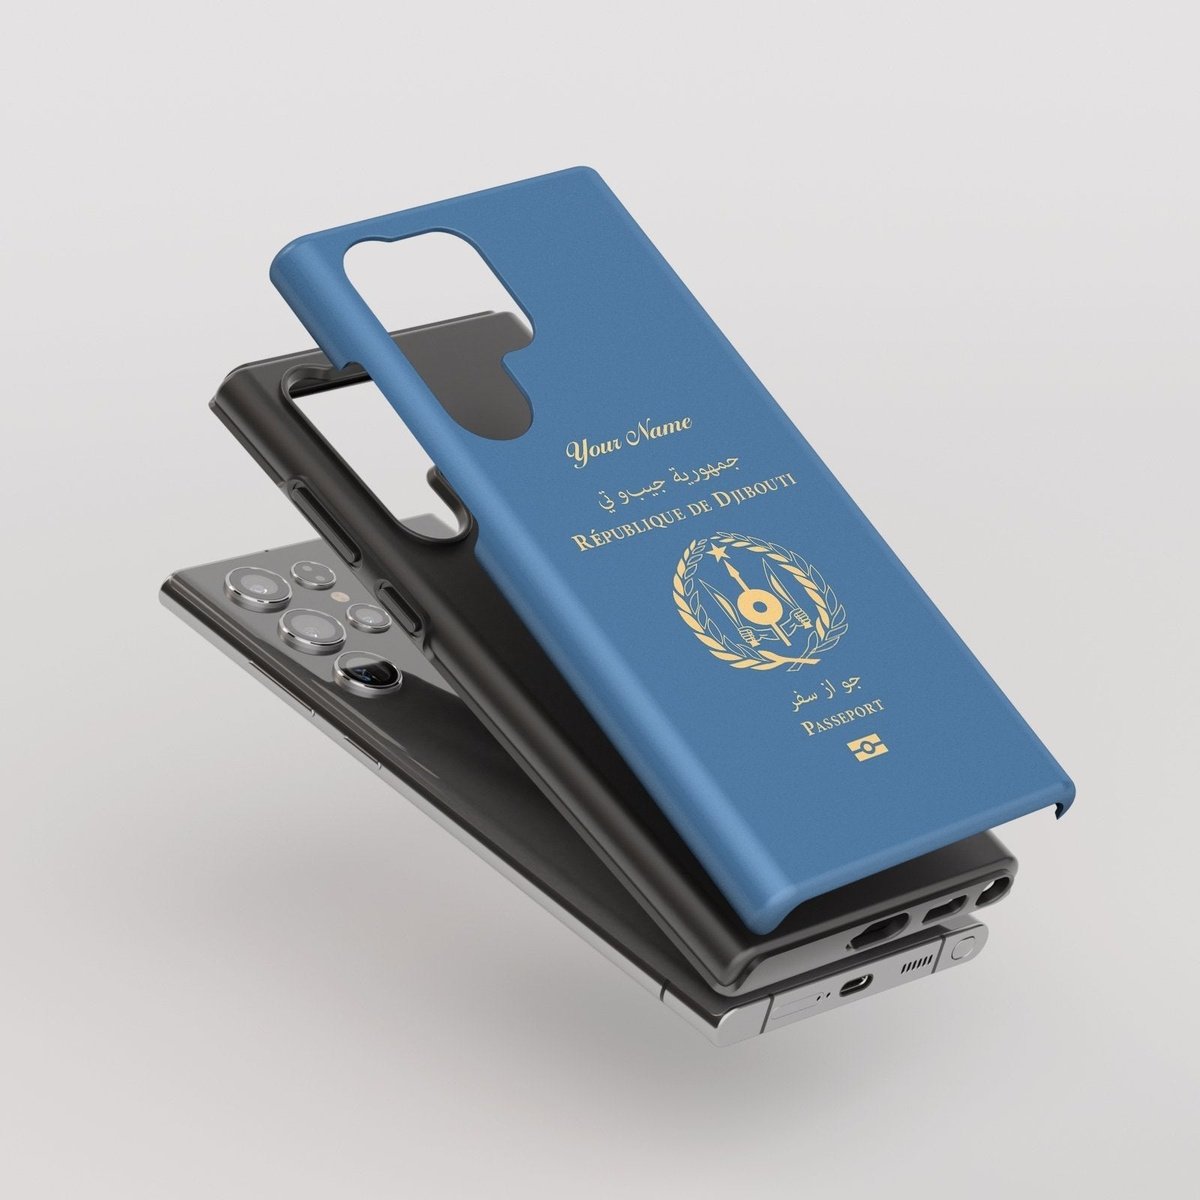 Djibouti Passport - Samsung Galaxy S Case